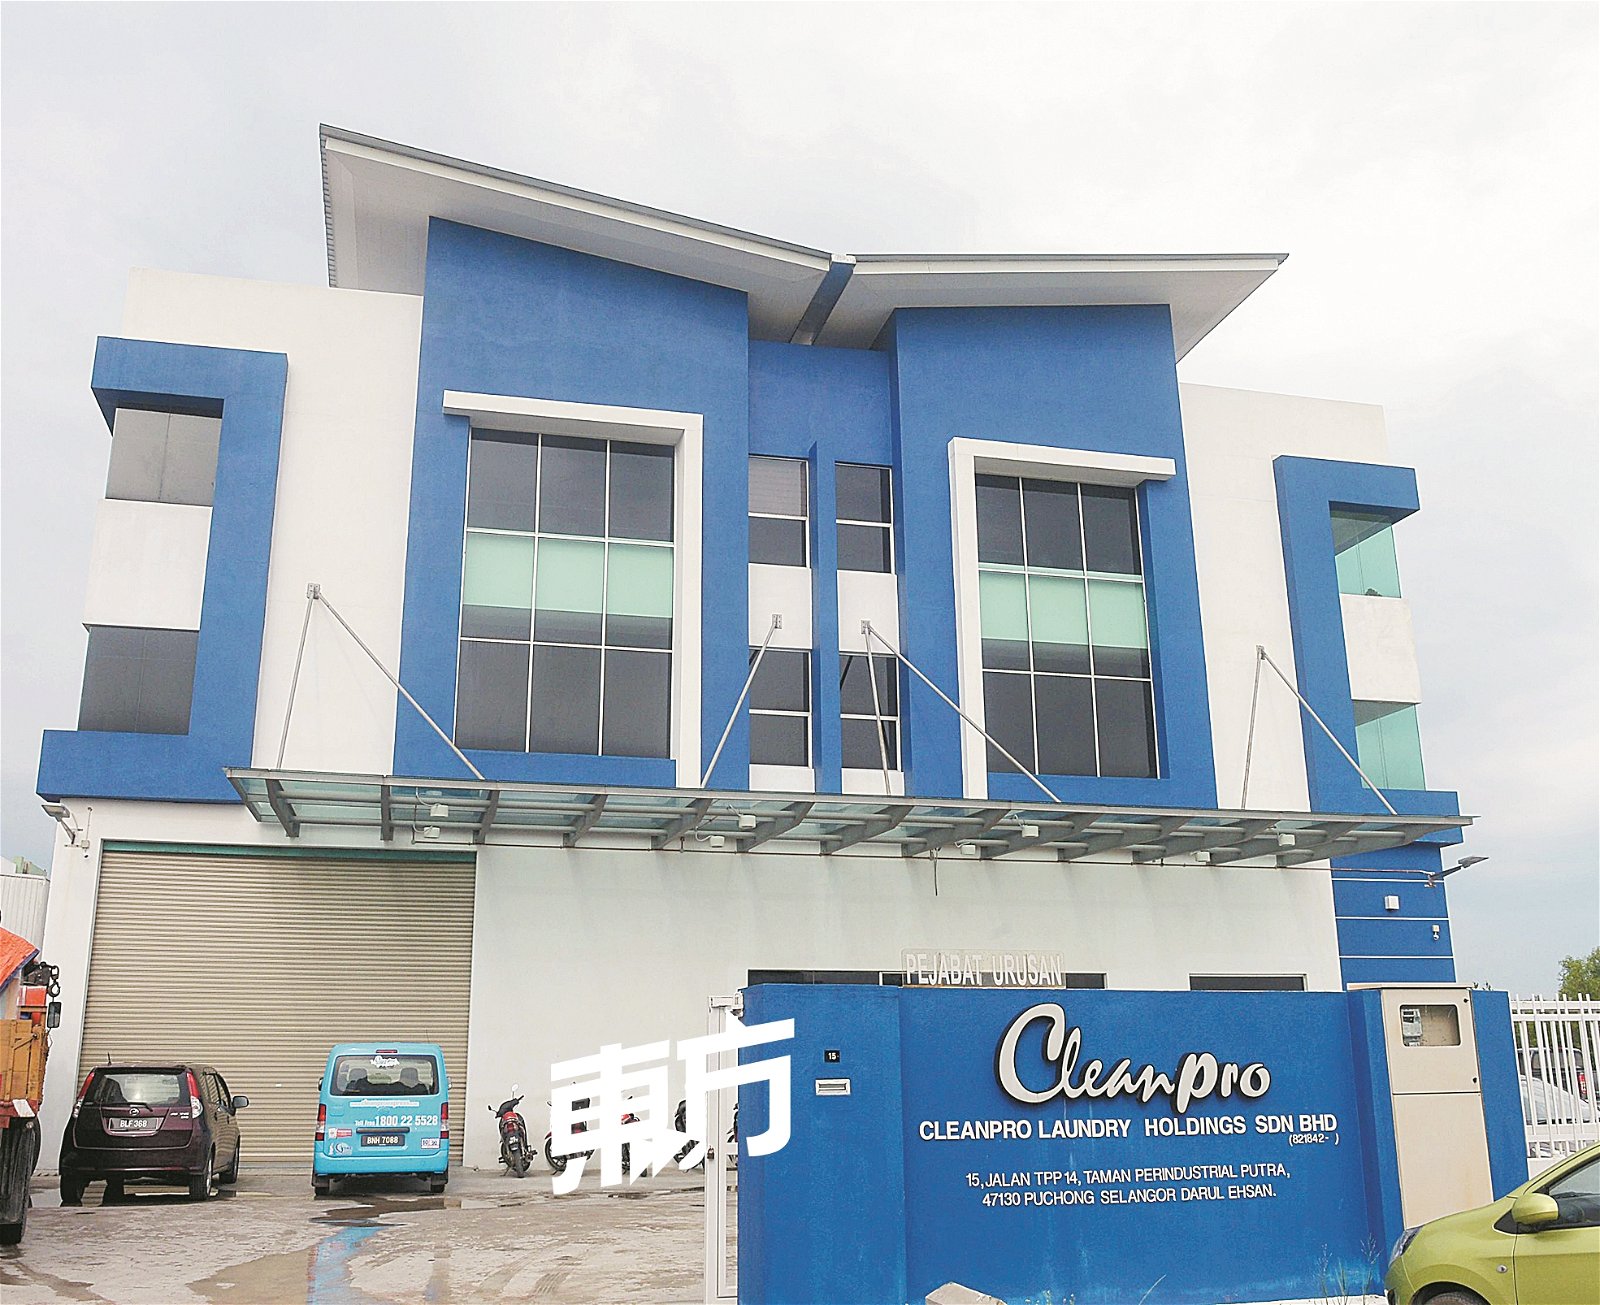 Cleanpro Express推出大马首间自助洗衣店，至今除了马来西亚外，在国外也设有分店，并已扩展至300间加盟店，接下来将进驻汶莱及其他具潜能的东南亚国家市场，为顾客提供高素质、低收费、快捷、方便及安全等服务。